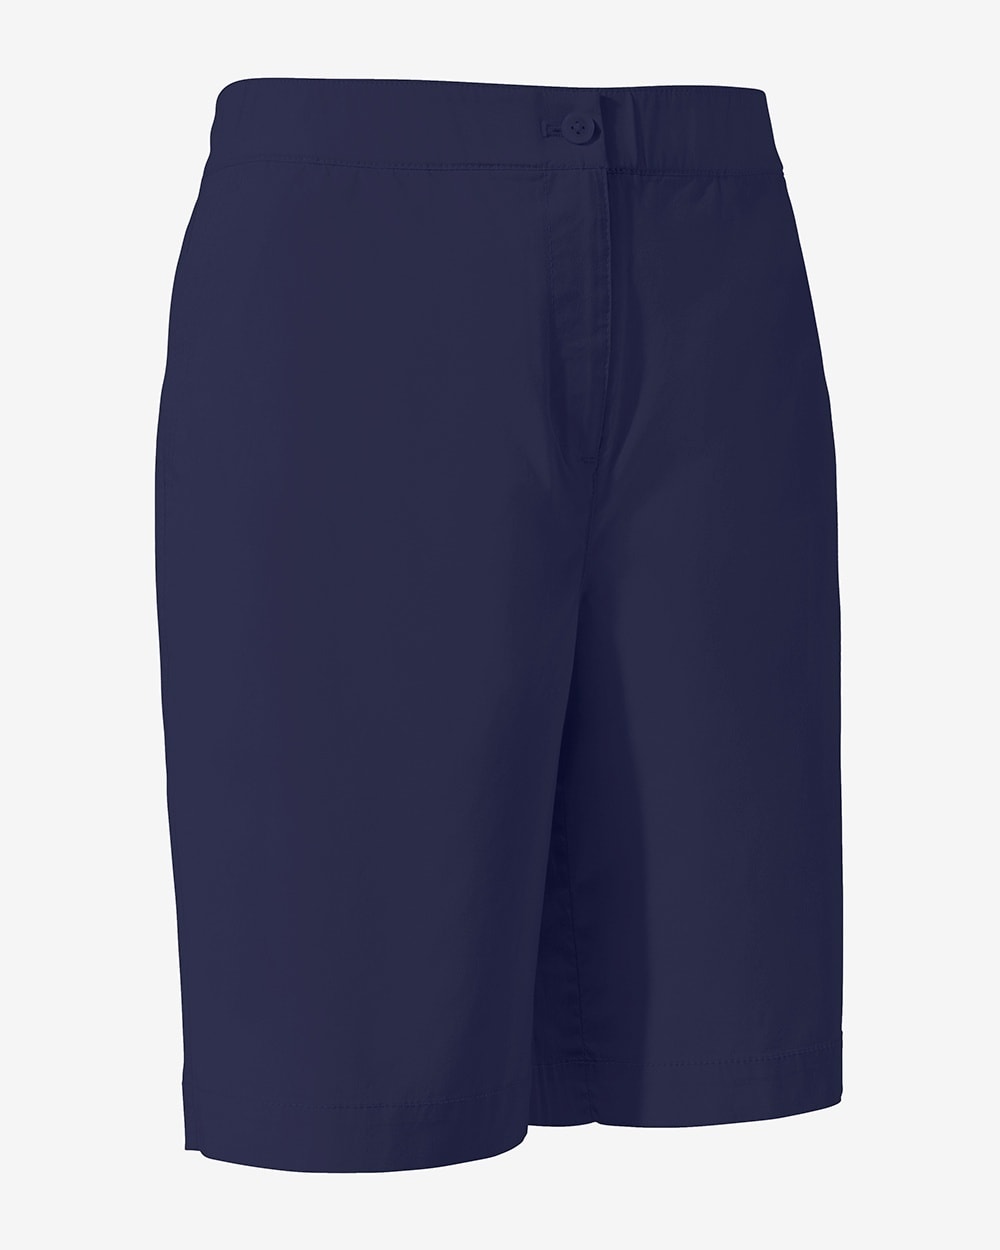 Fitigue Comfort Waist Shorts